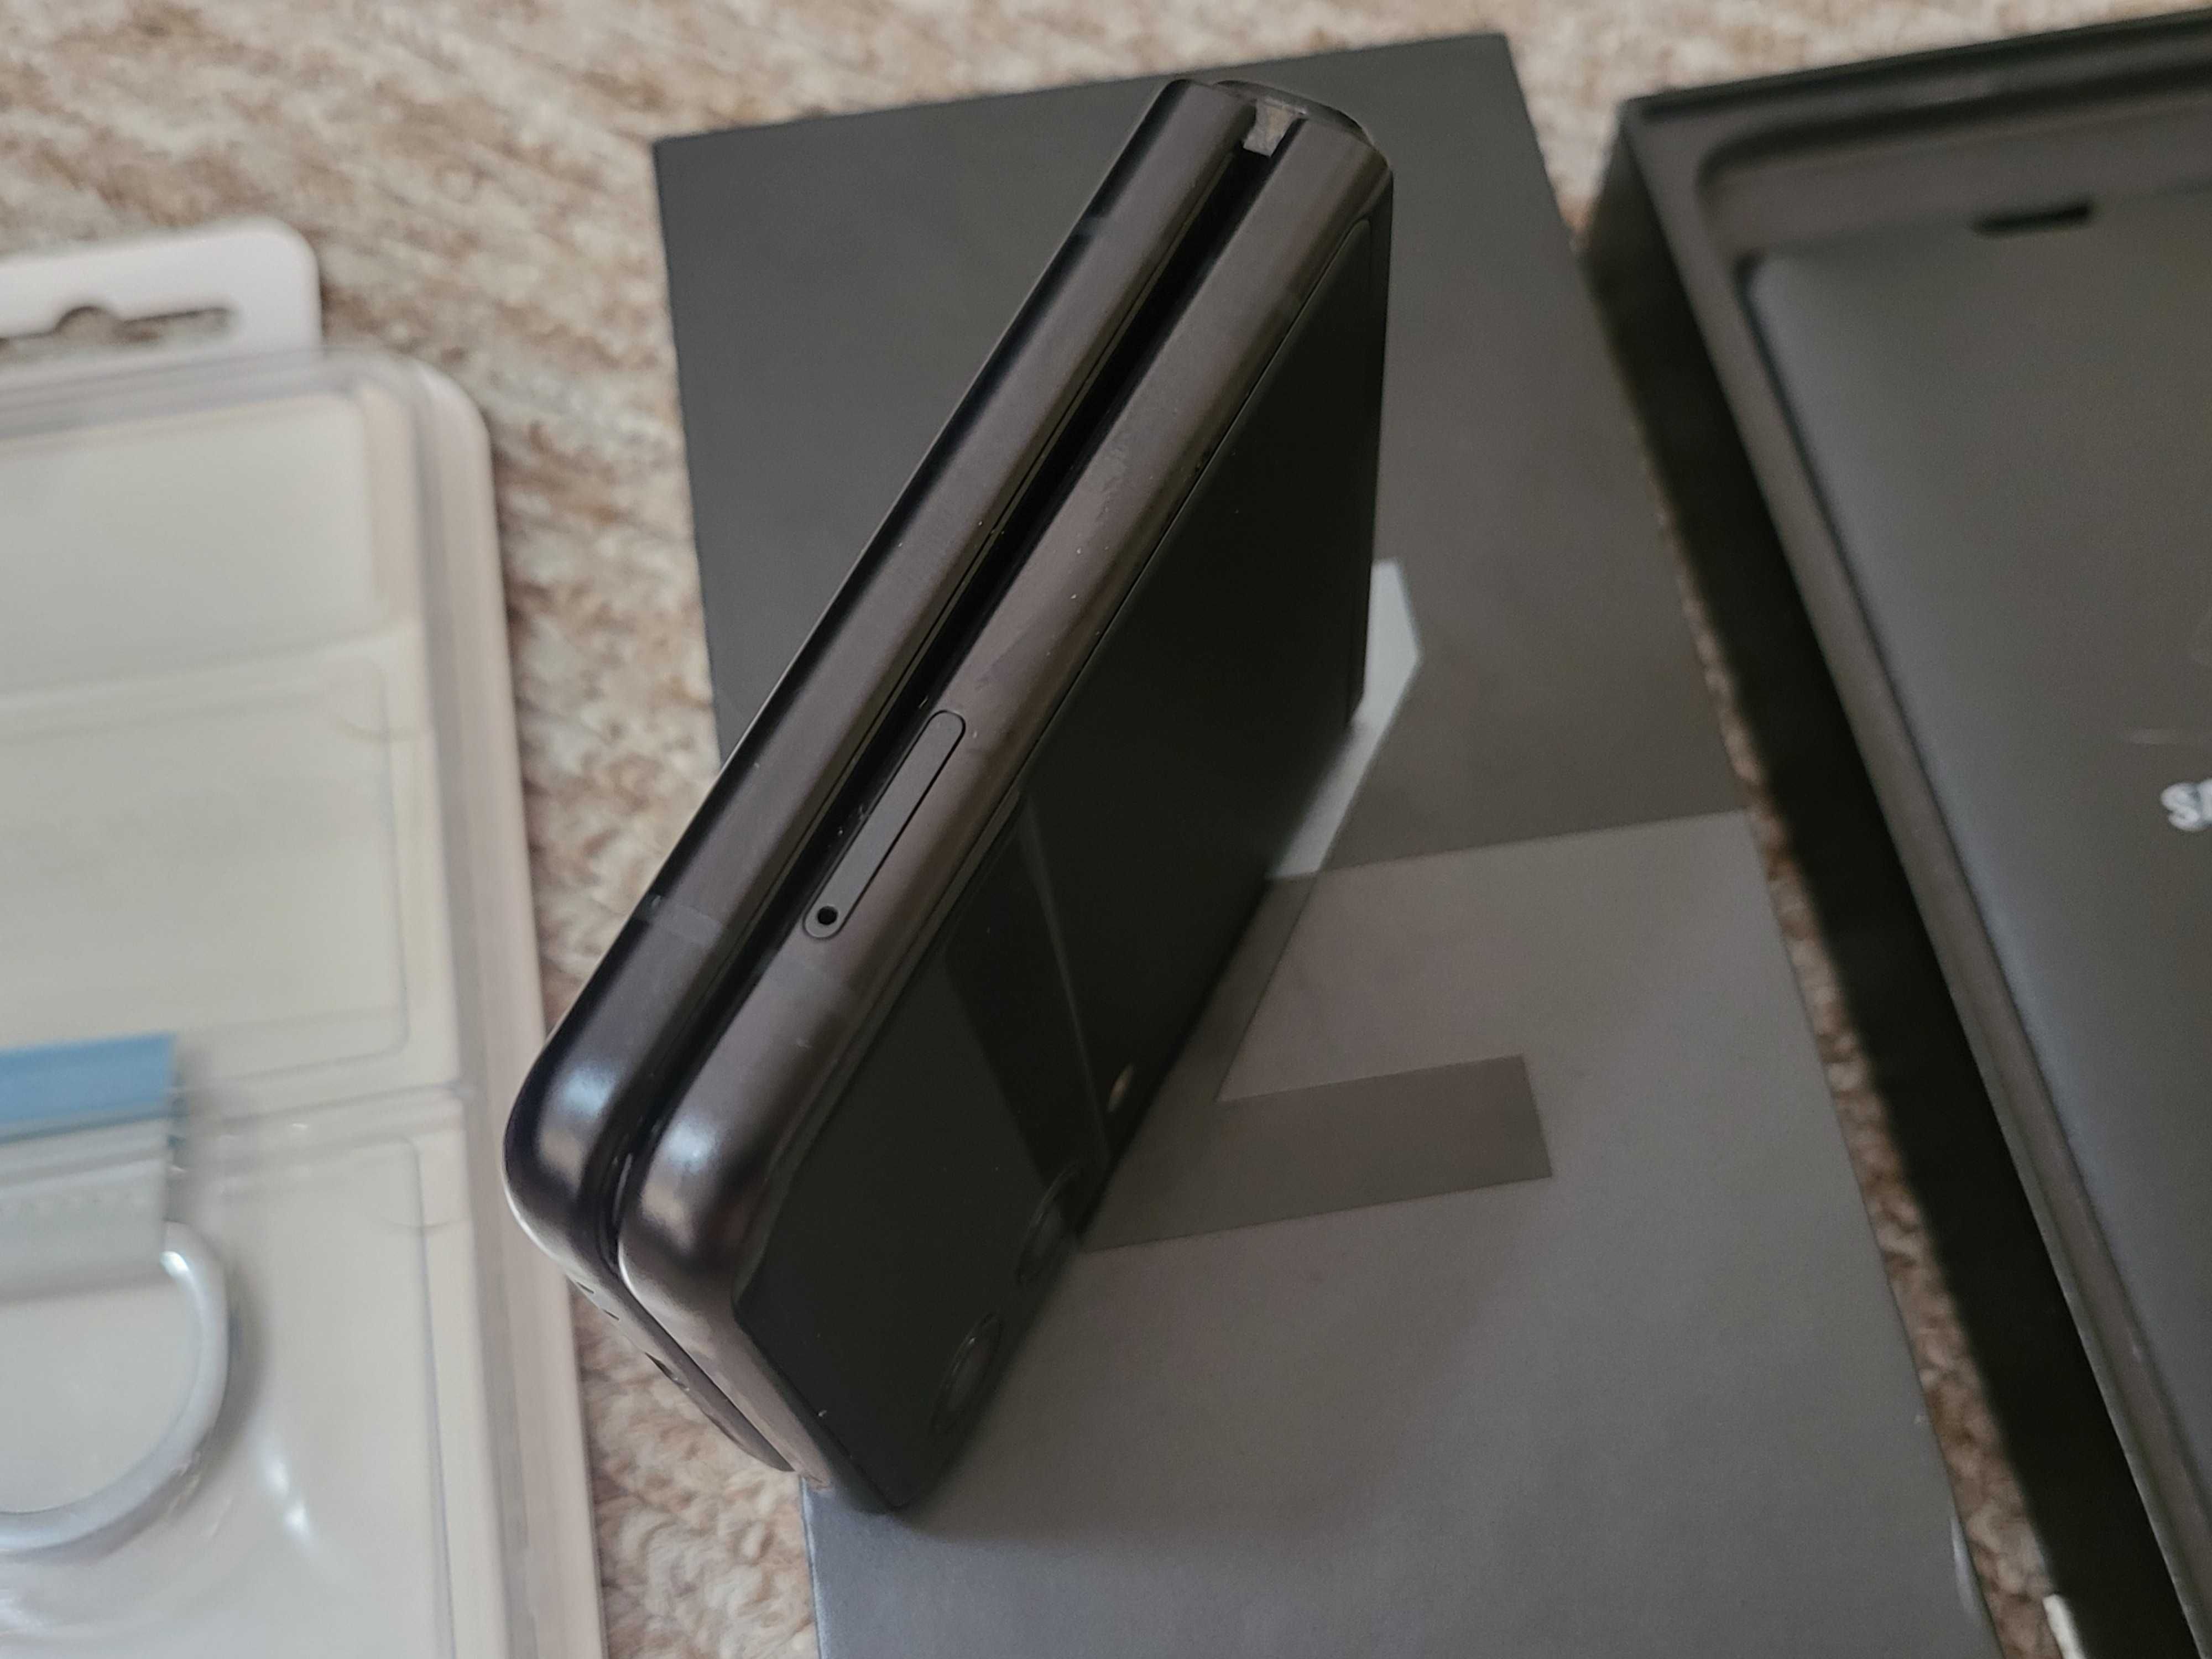 Samsung Galaxy Z Flip3 5G (SM-F711B) 8\128 Black , +чохол\плівка